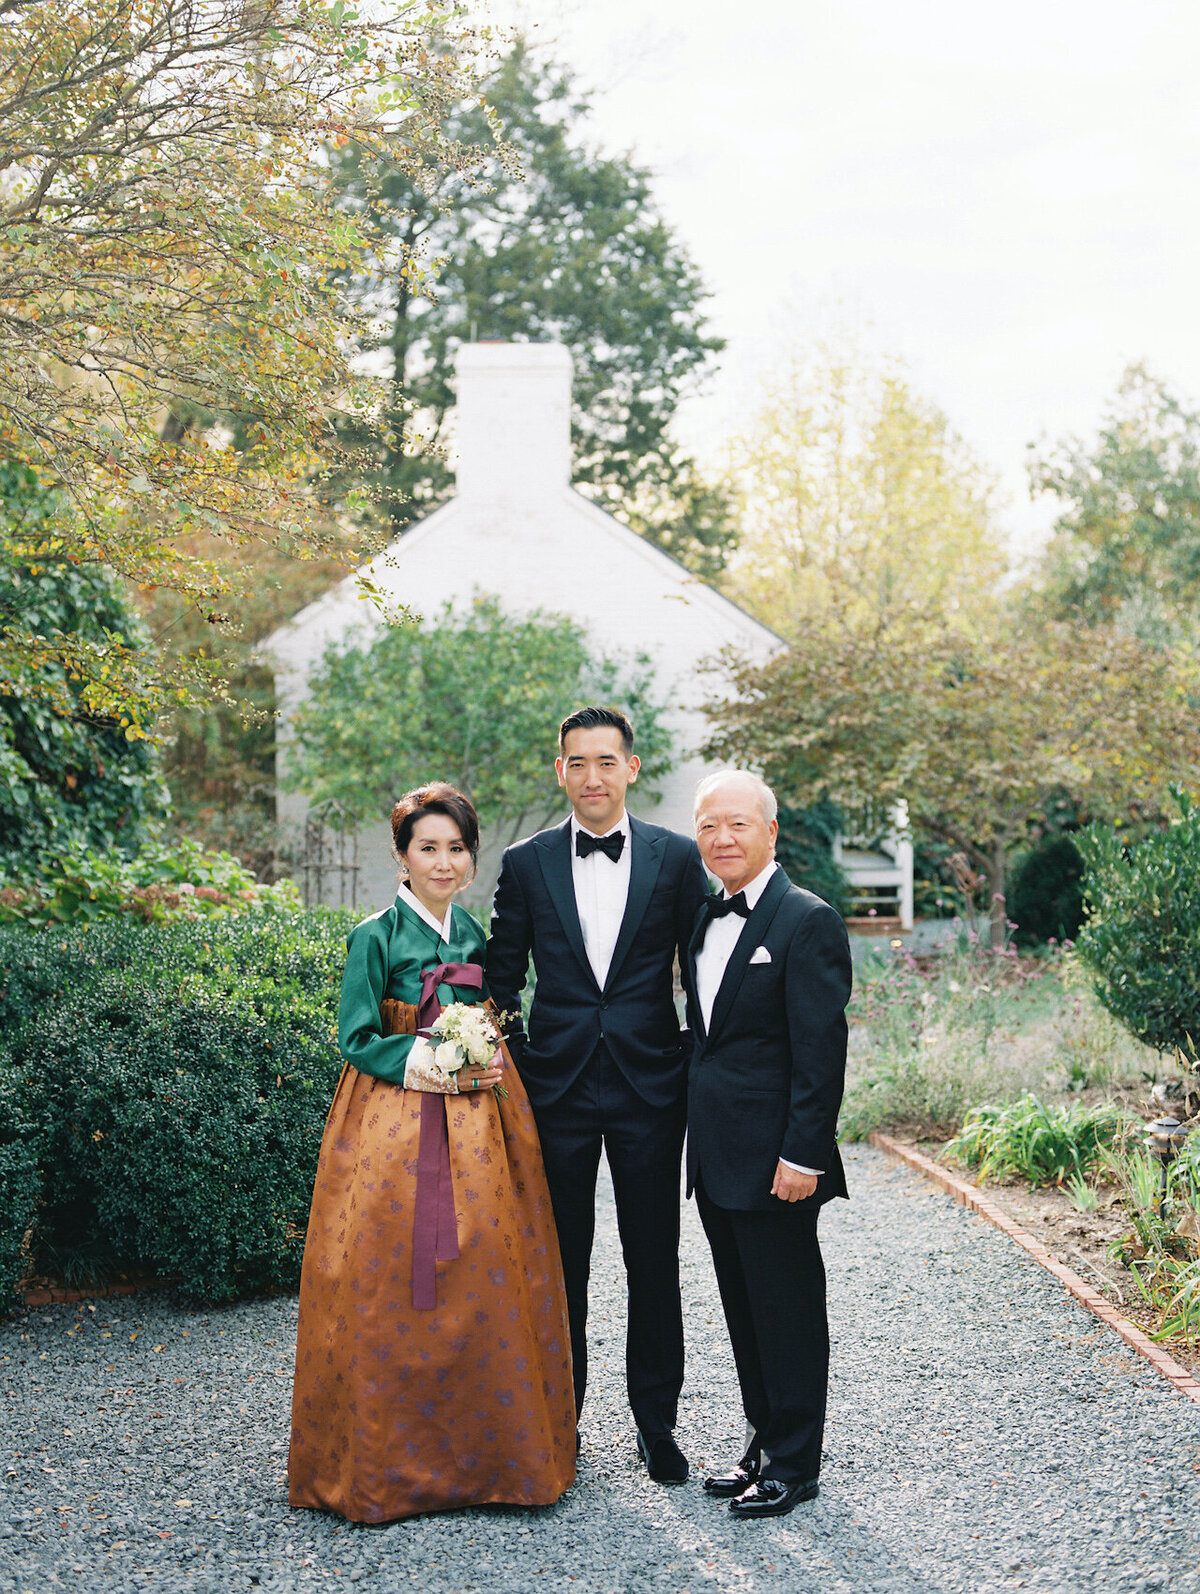 Family Photos by Washington DC Wedding Photographer Robert Aveau for © Bonnie Sen Photography